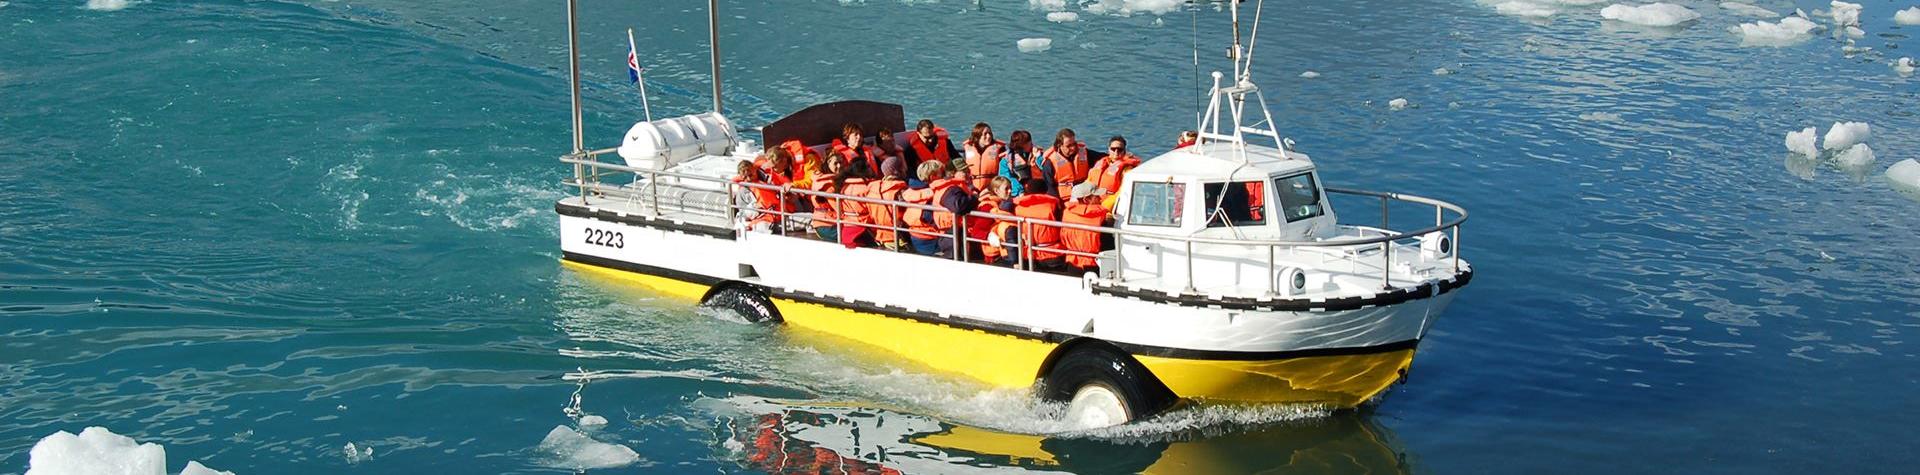 Jökulsárlón Glacial Lagoon & Boat Tour